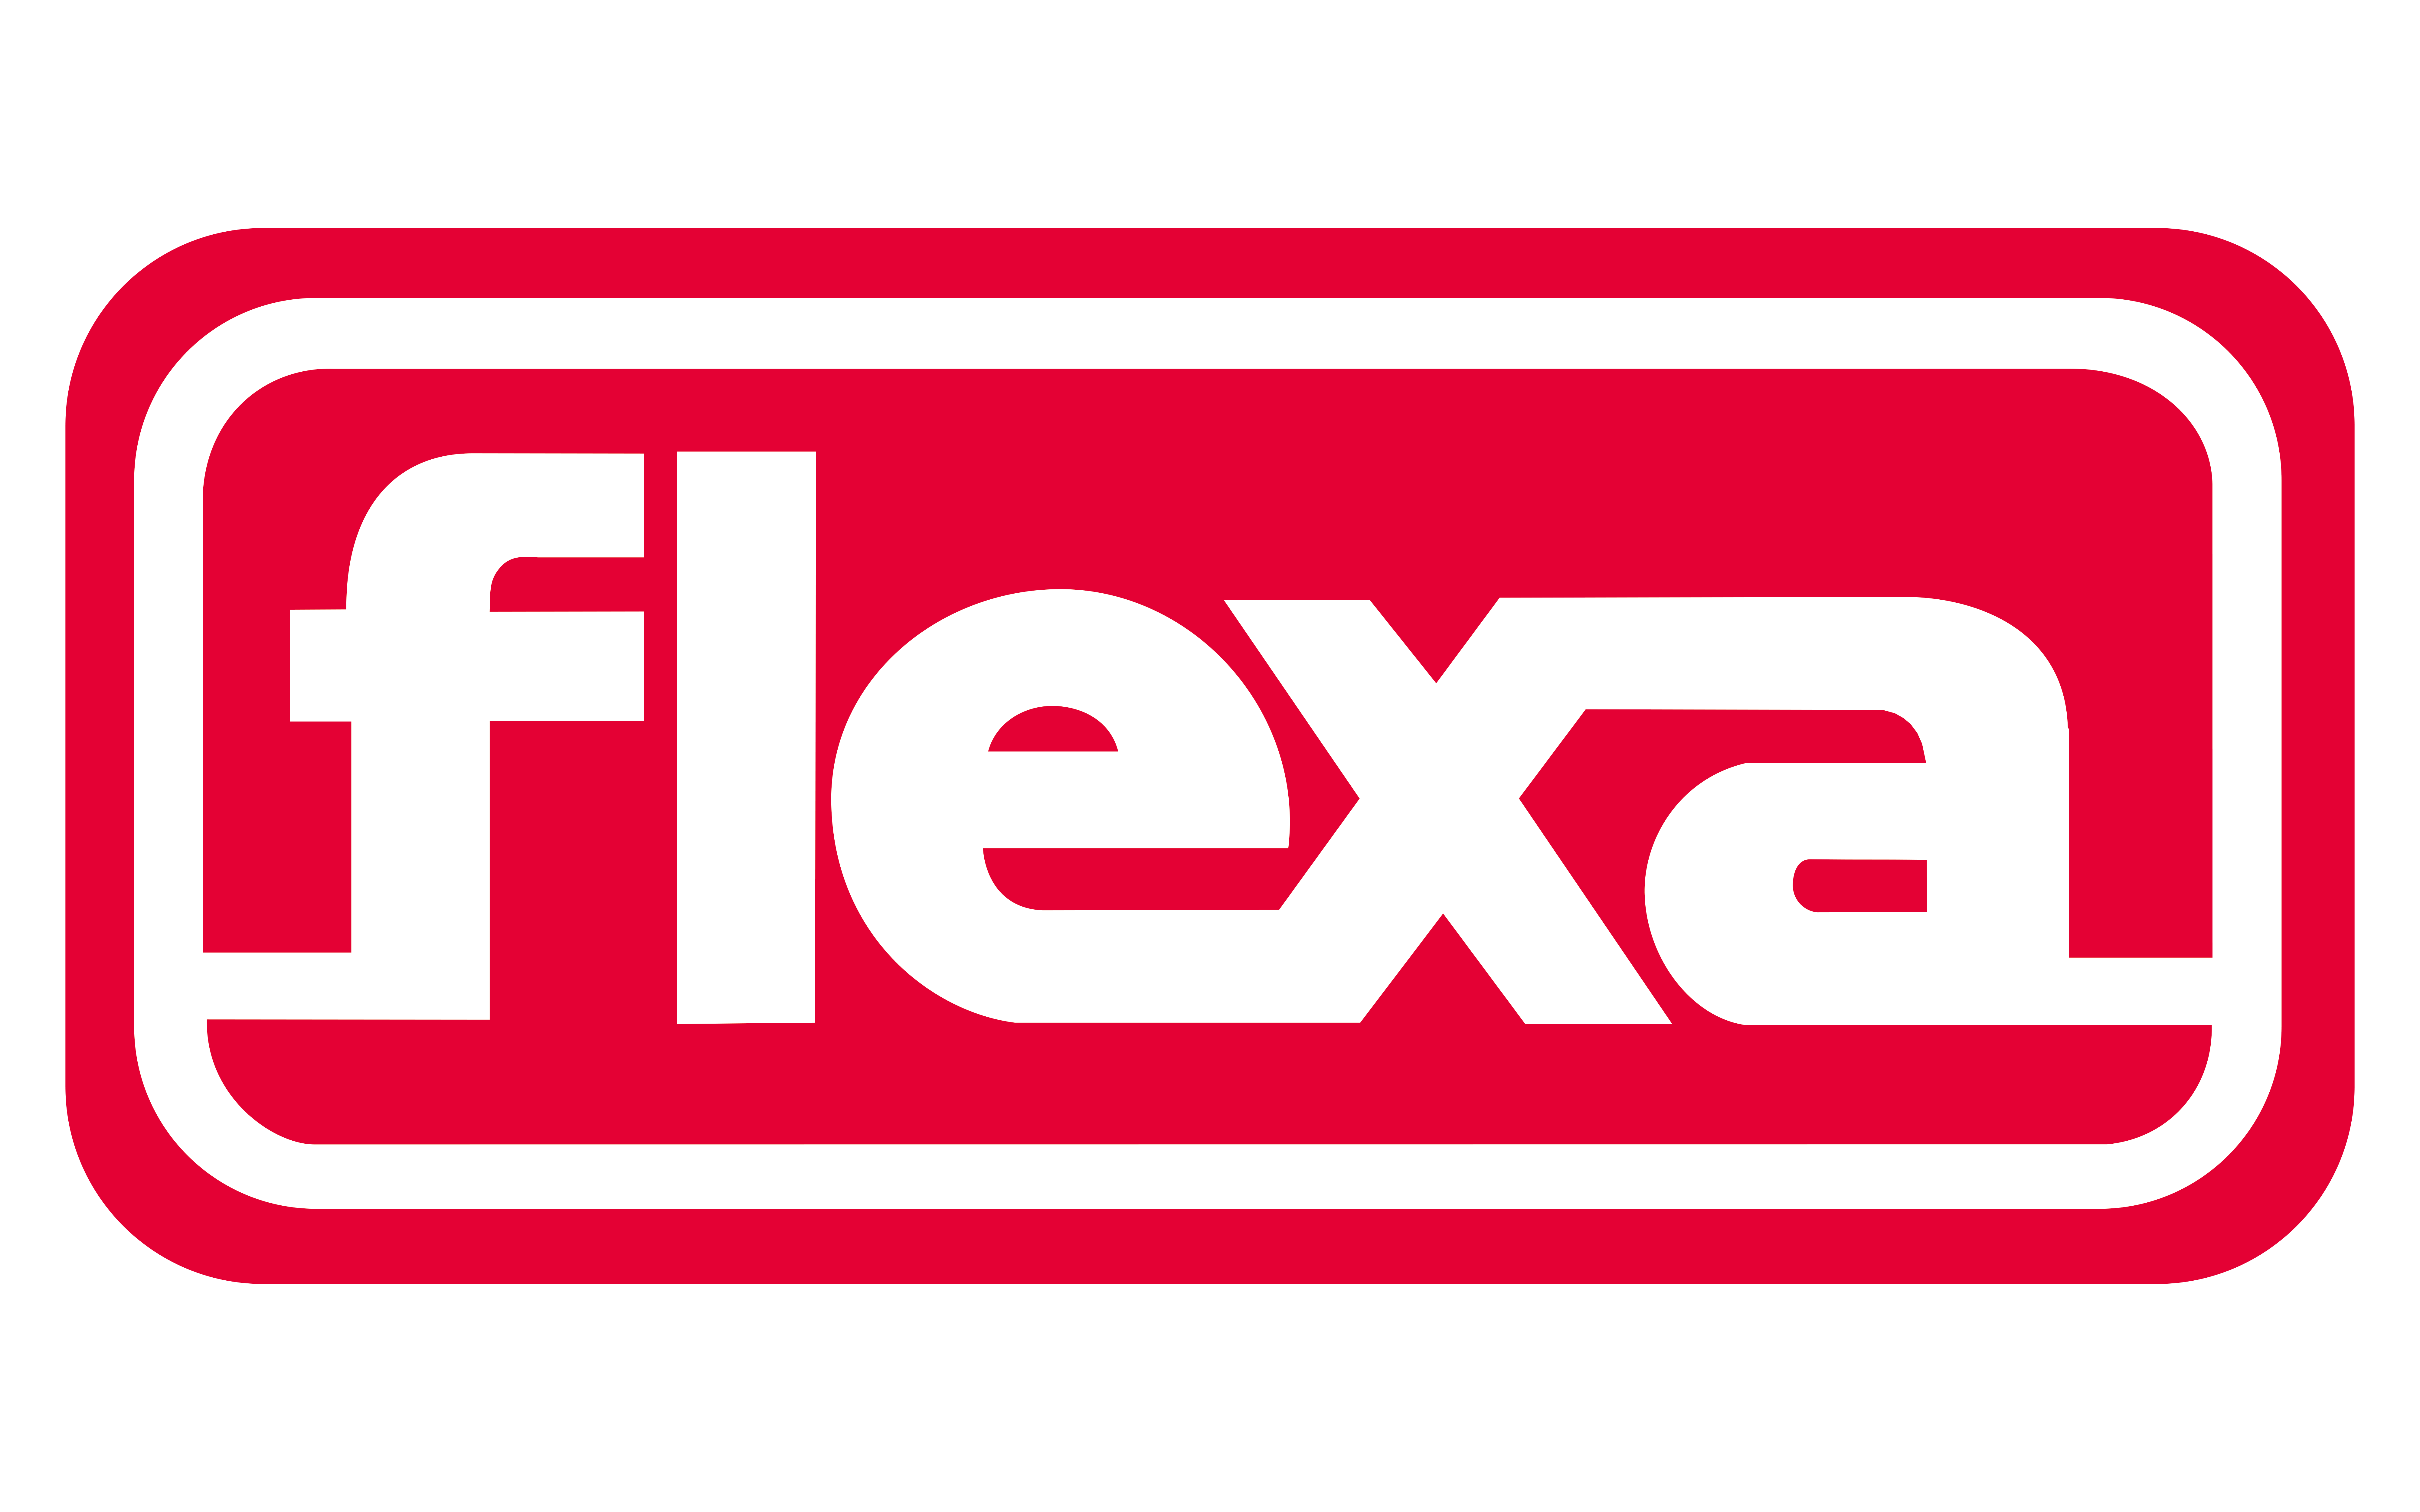 FLEXA GmbH & Co Produktion und Vertrieb AG